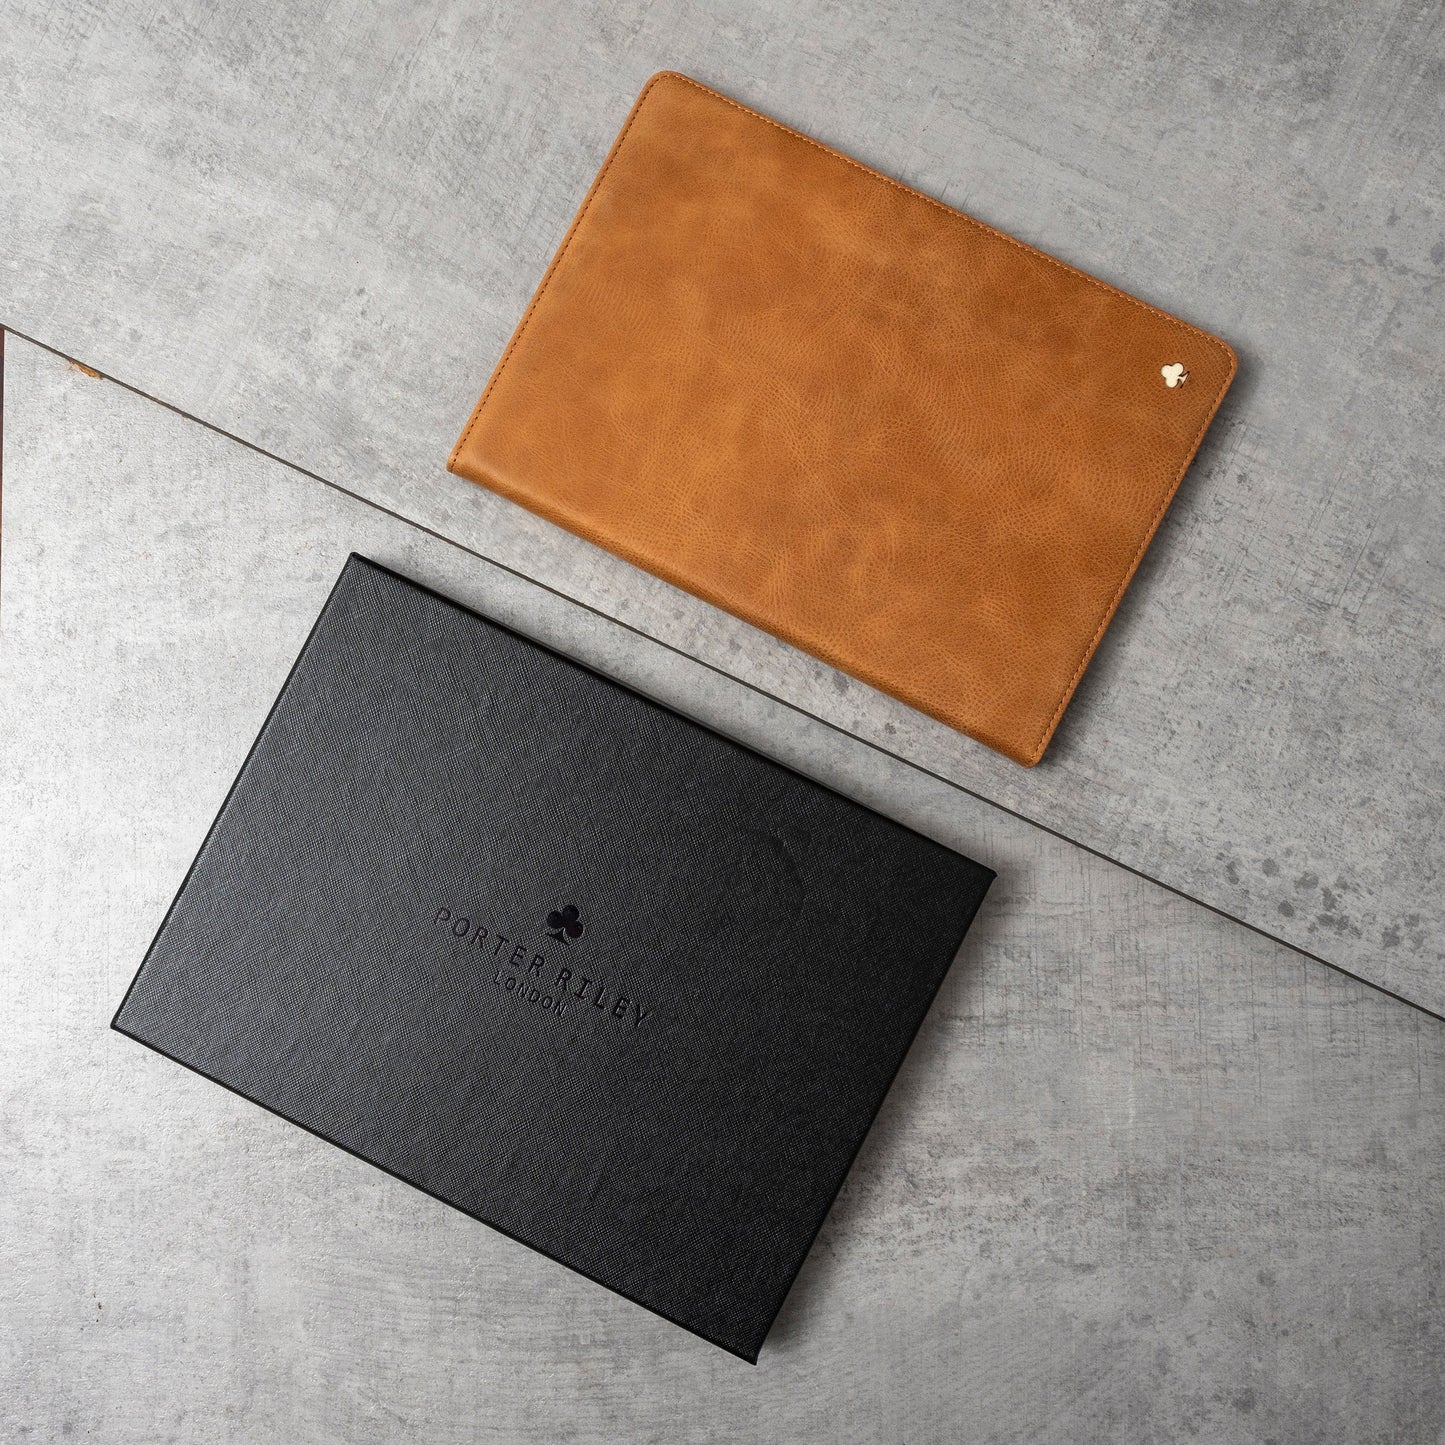 iPad Mini 5 Leather Case. Premium Slim Genuine Leather Stand Case/Cover/Wallet (Tan)